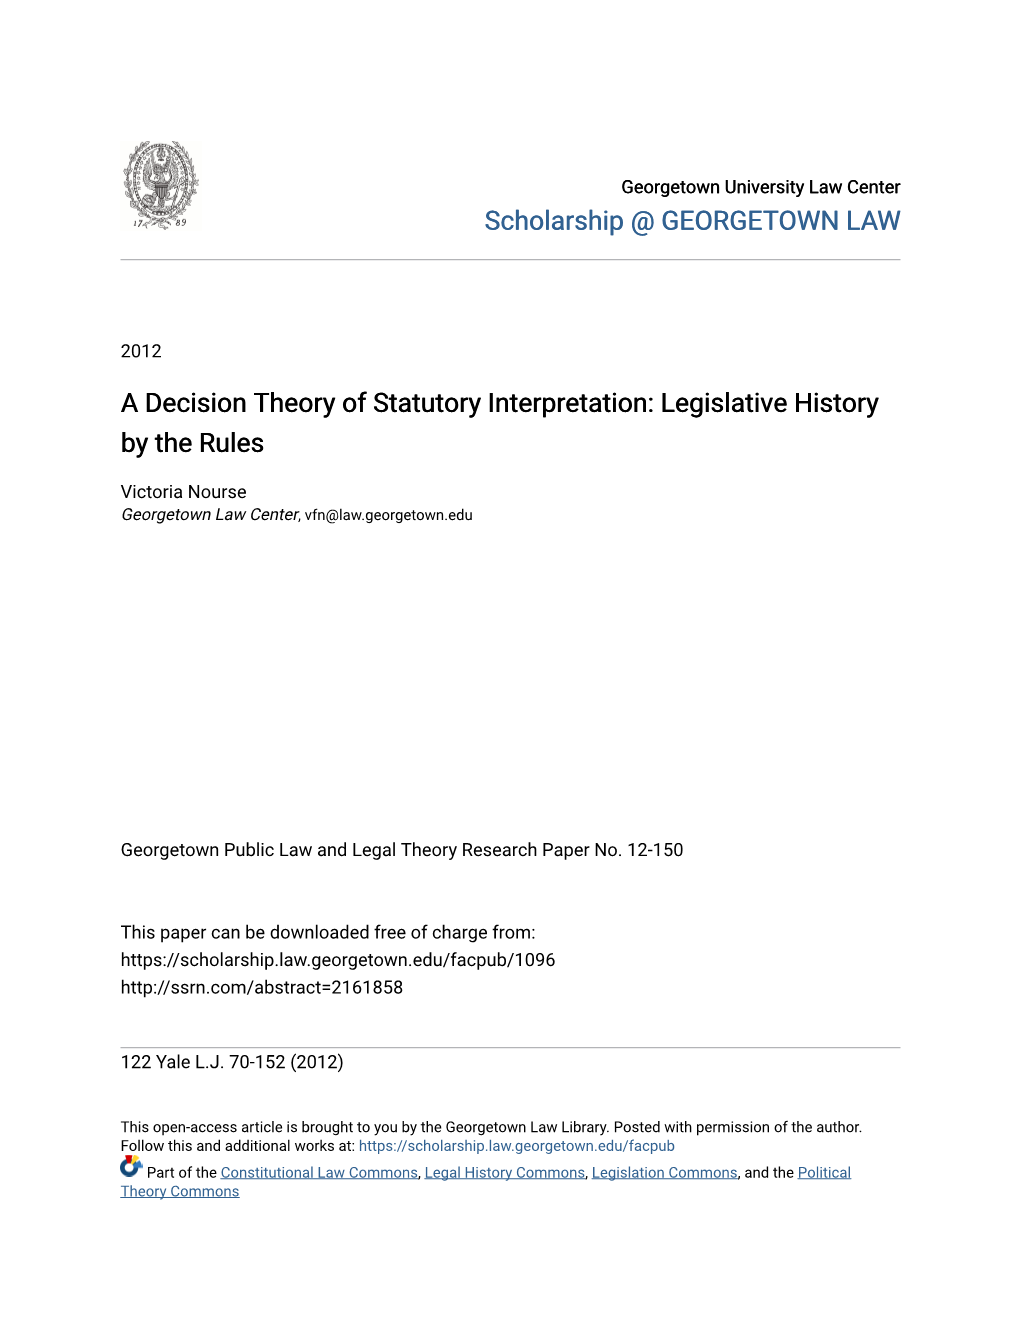 A Decision Theory of Statutory Interpretation: Legislative History by the Rules